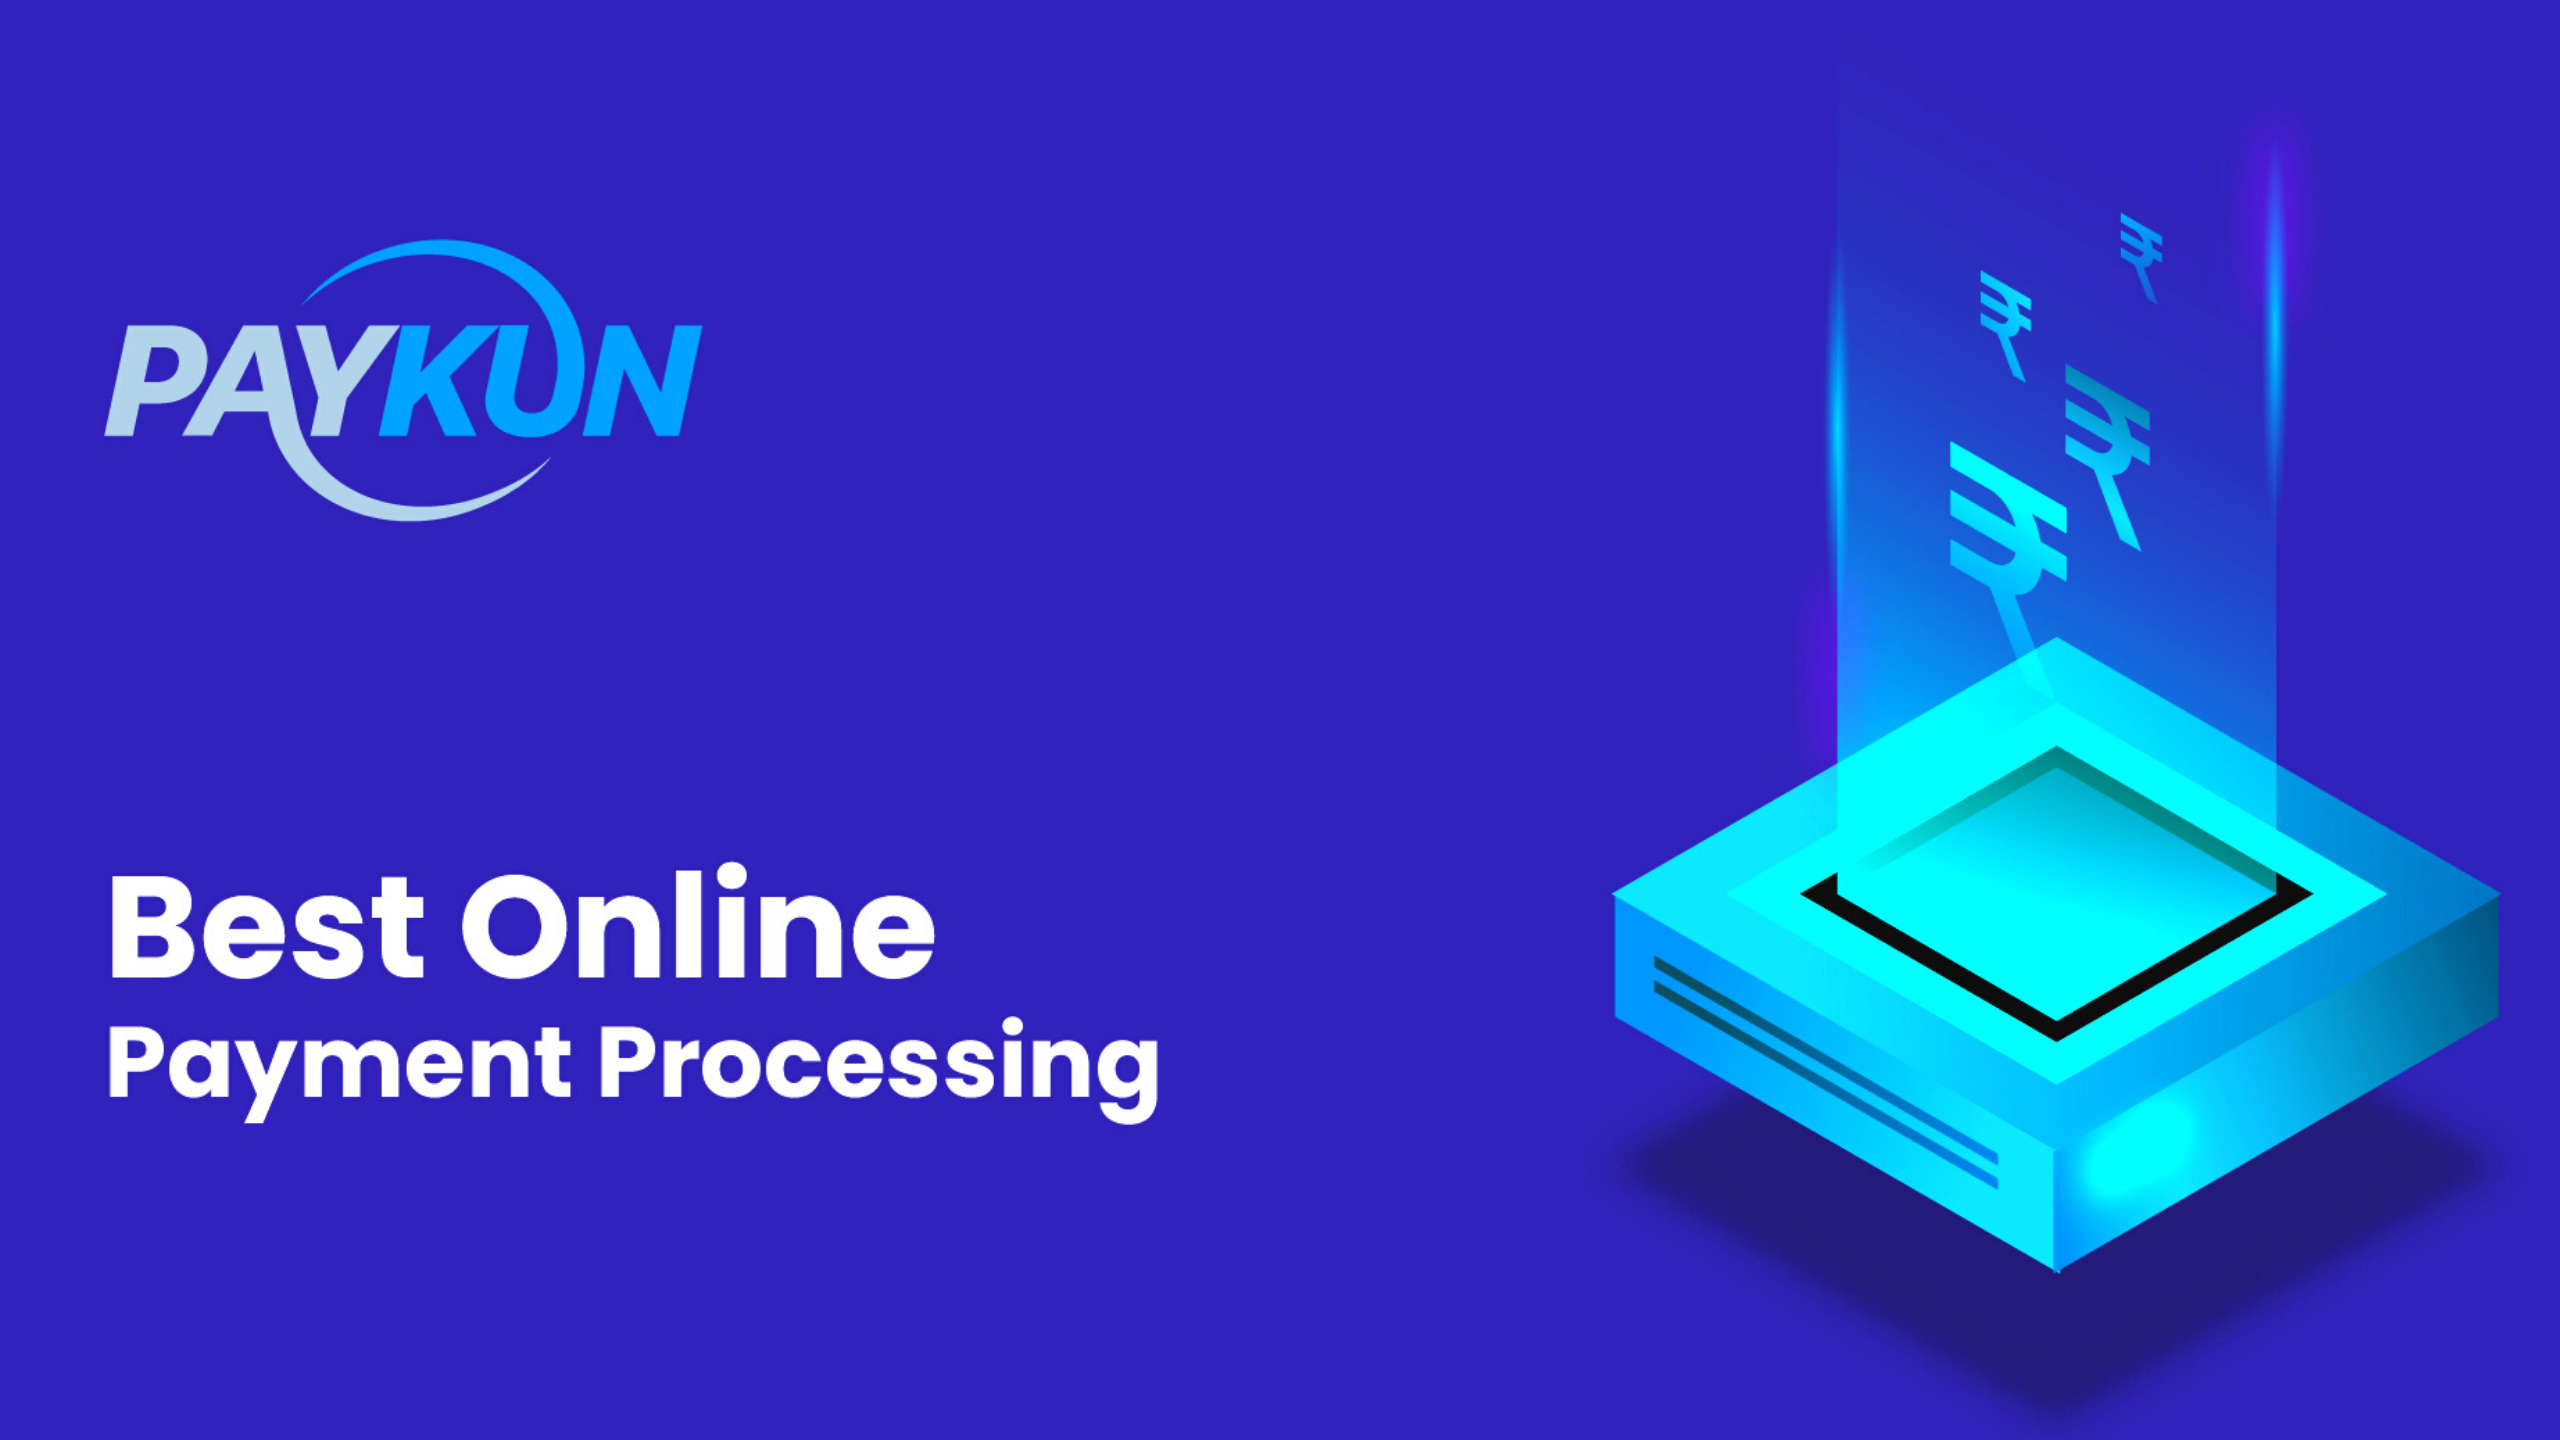 PayKun Best Online Payment Processing